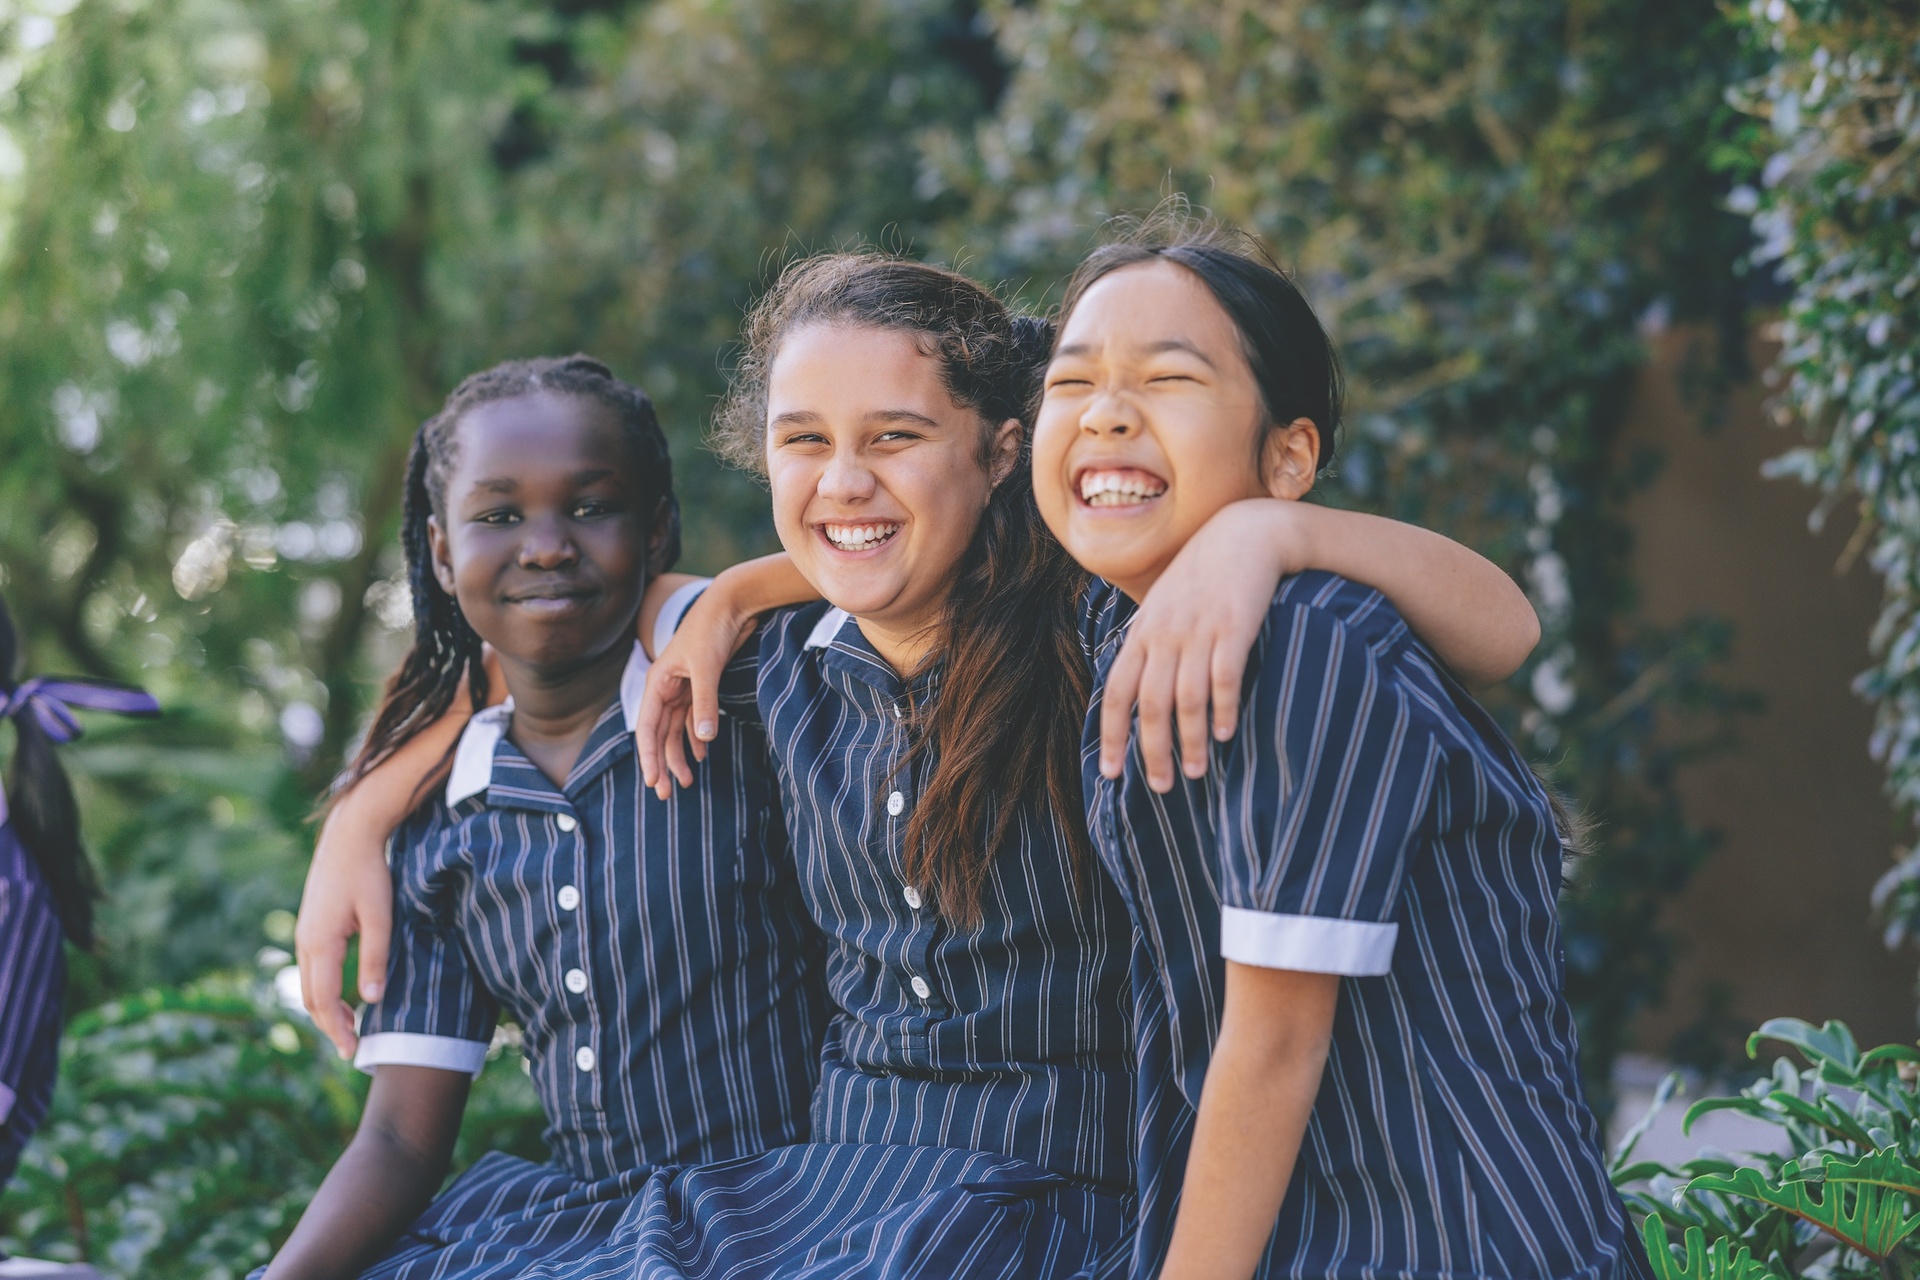 School girls laughing in school uniform in Somerset Tasmania